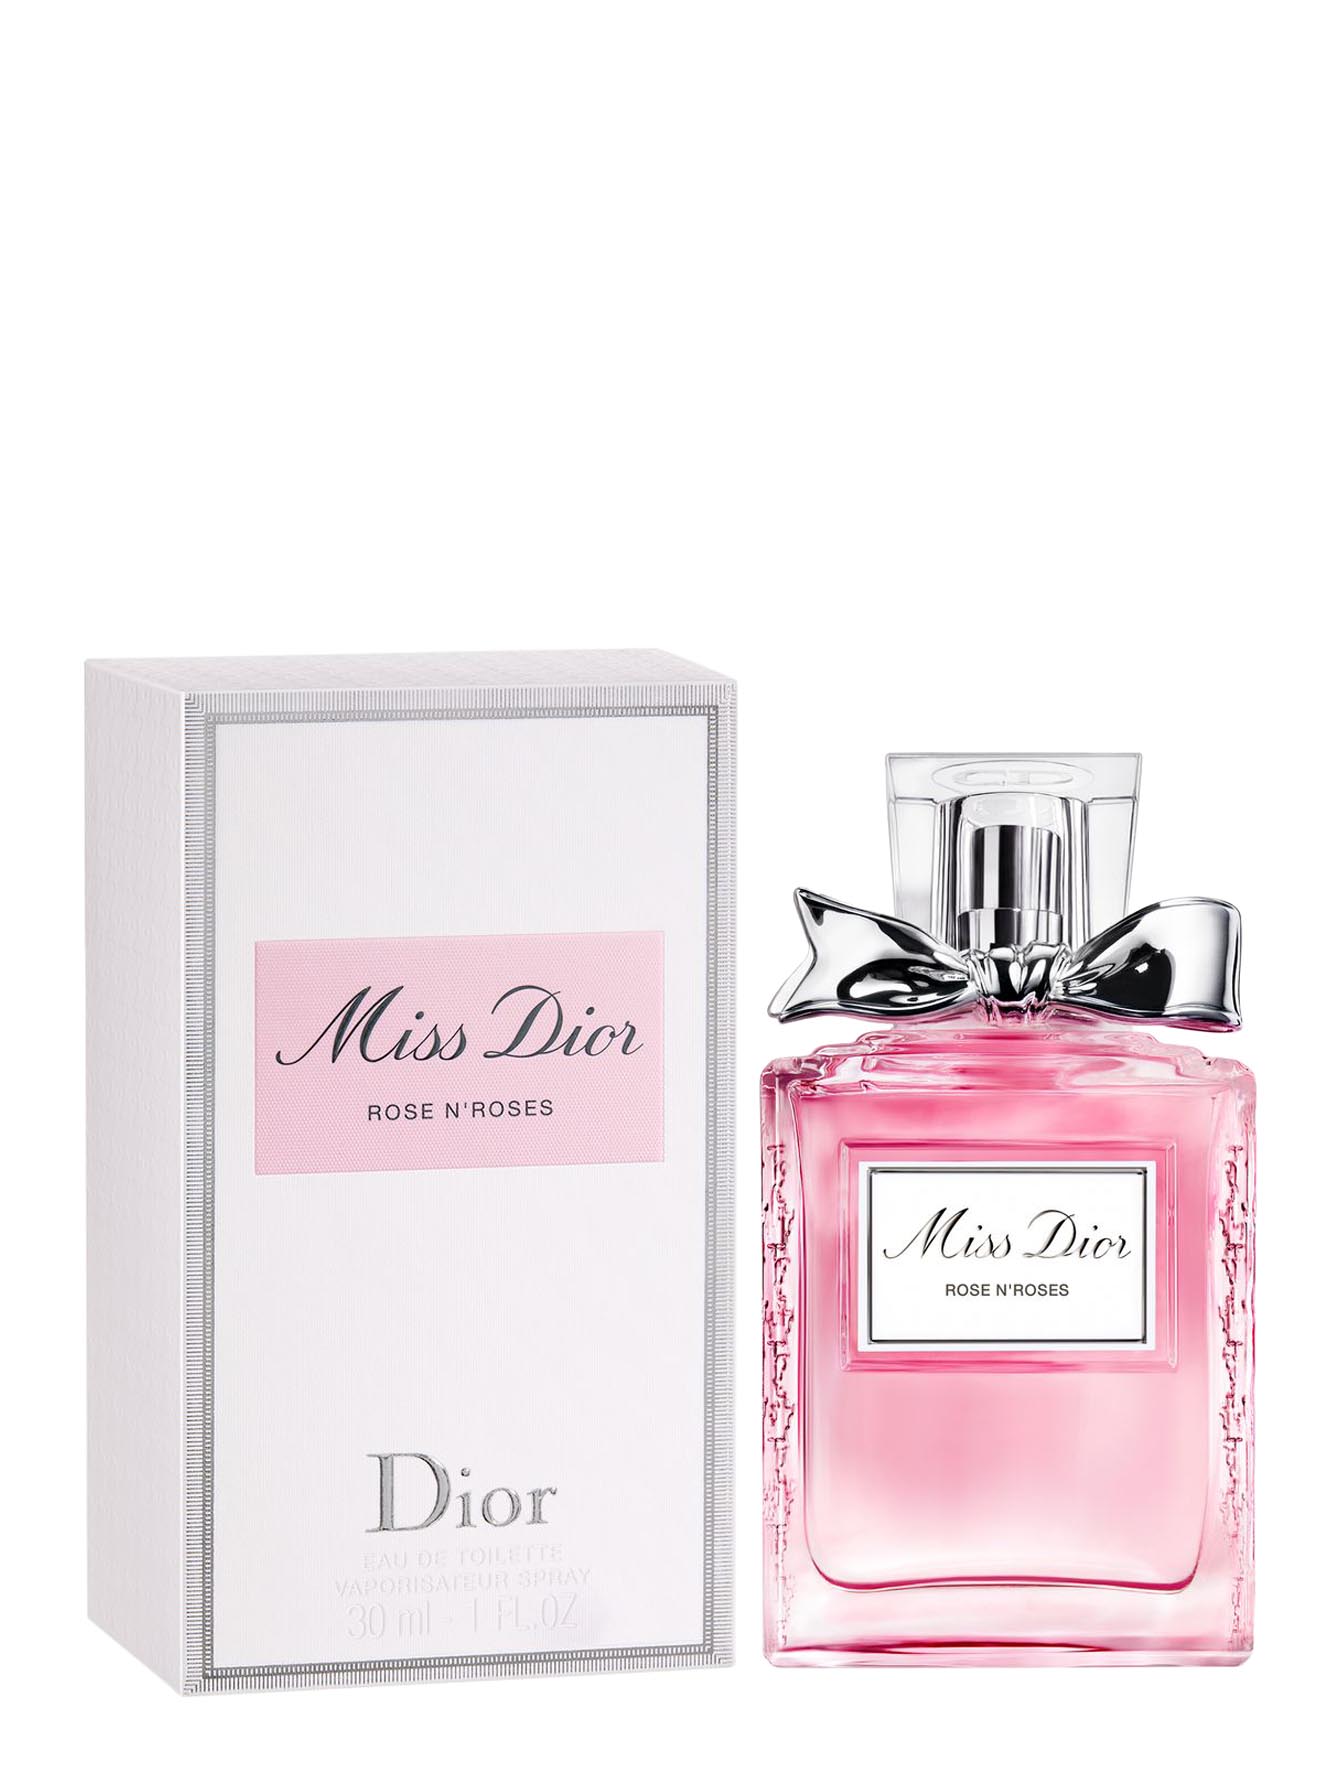 Мисс диор розовые. Dior Miss Dior Rose n Roses 100ml. Туалетная вода Miss Dior Rose n'Roses, 100 мл. Miss Dior 30 ml. Dior Miss Dior Rose n Roses EDT 100ml распив.